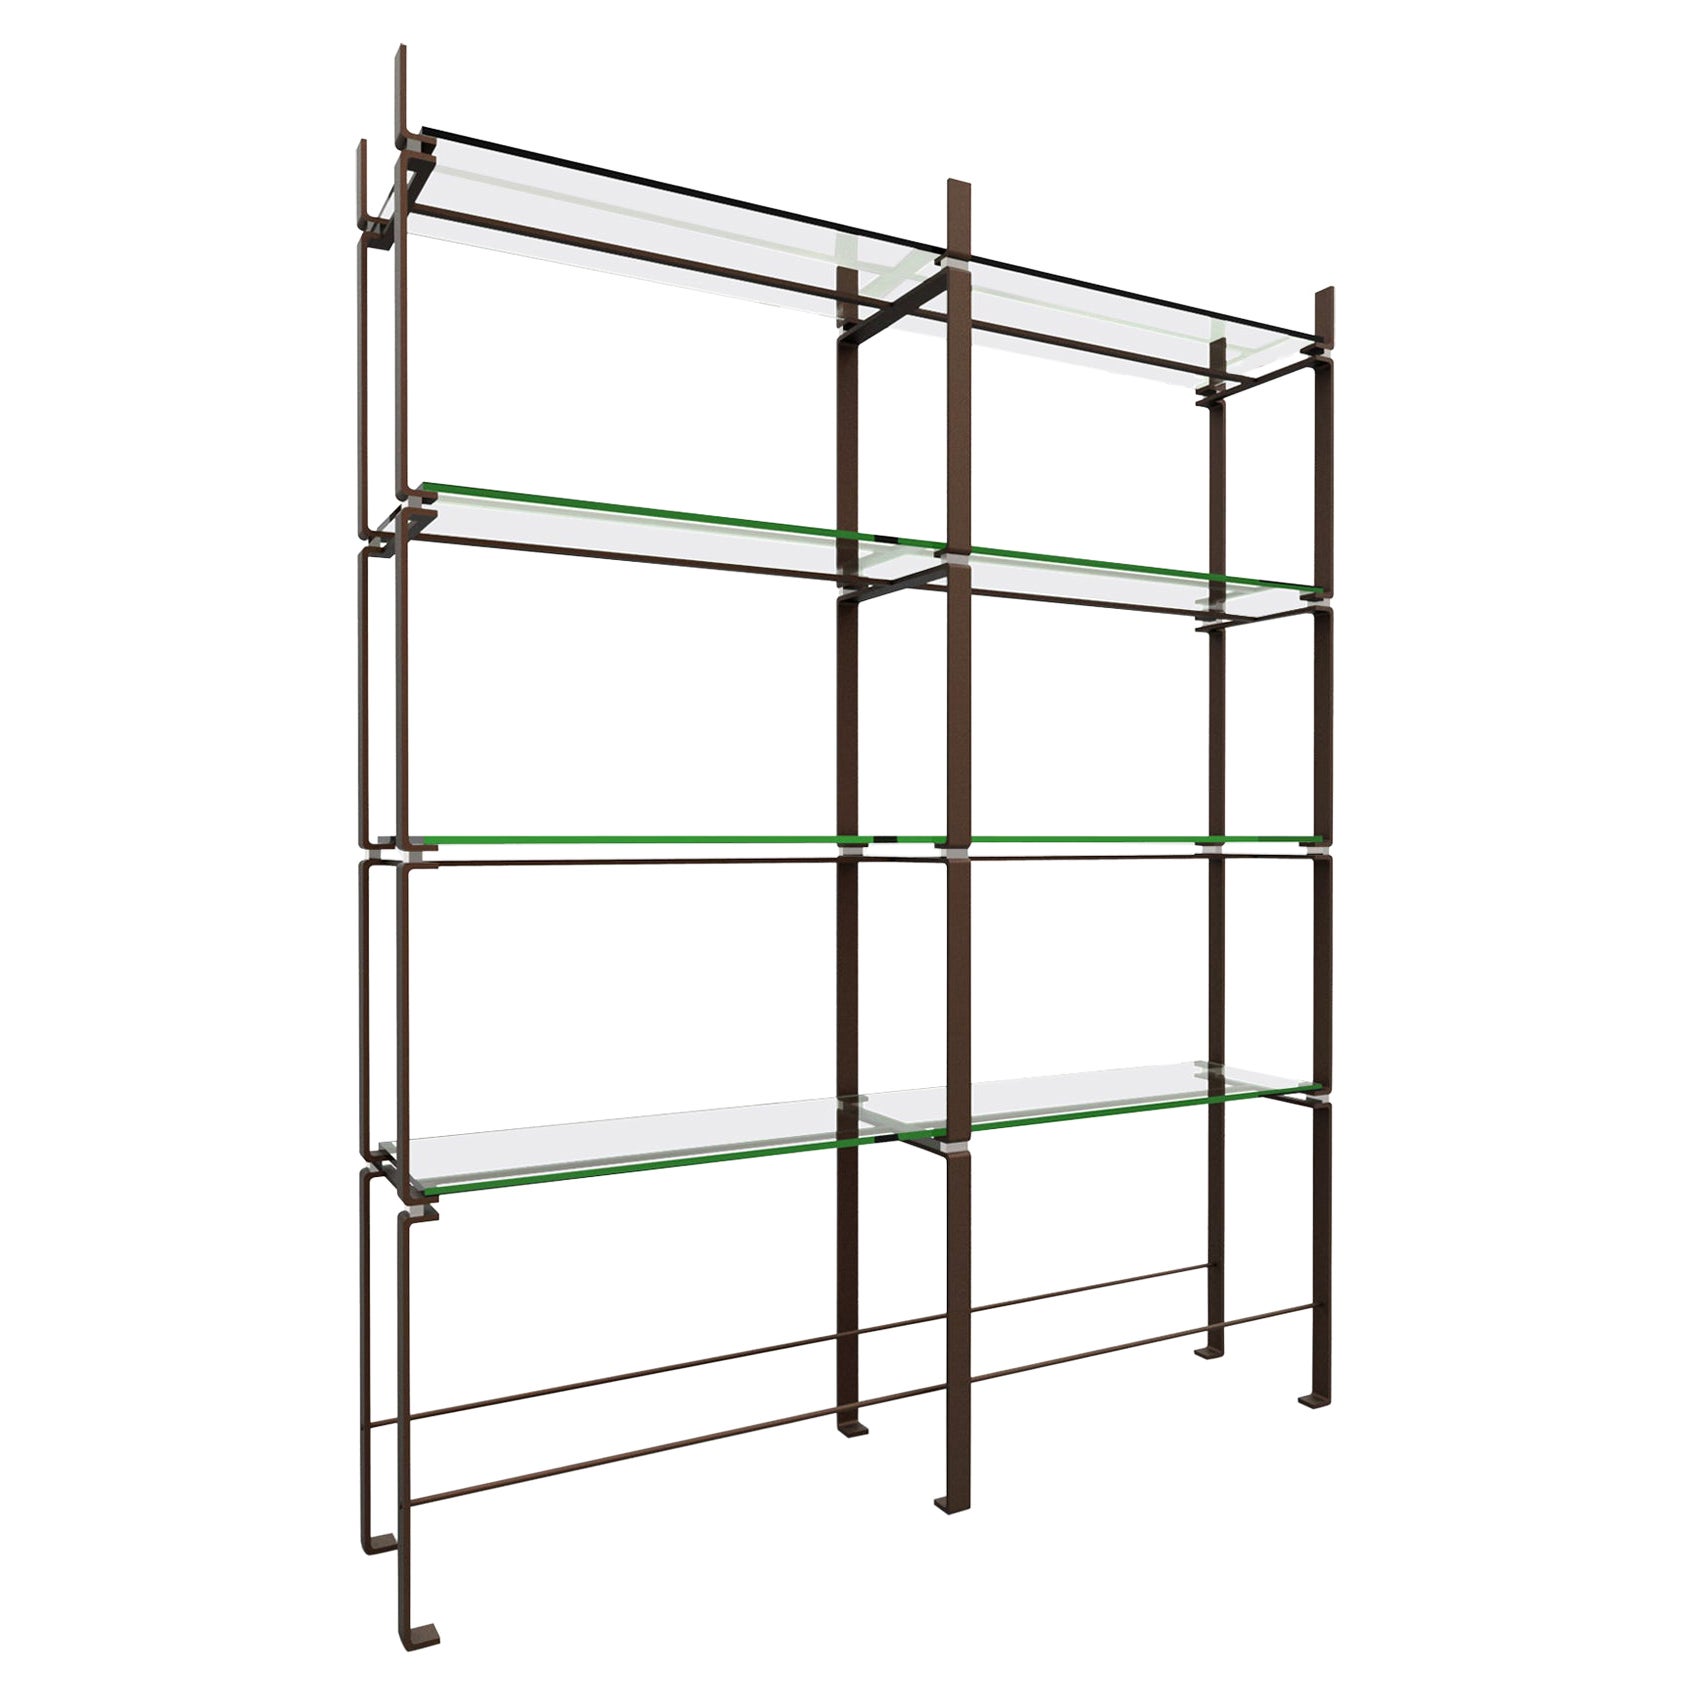 Double Etagere Shelves by Gentner Design